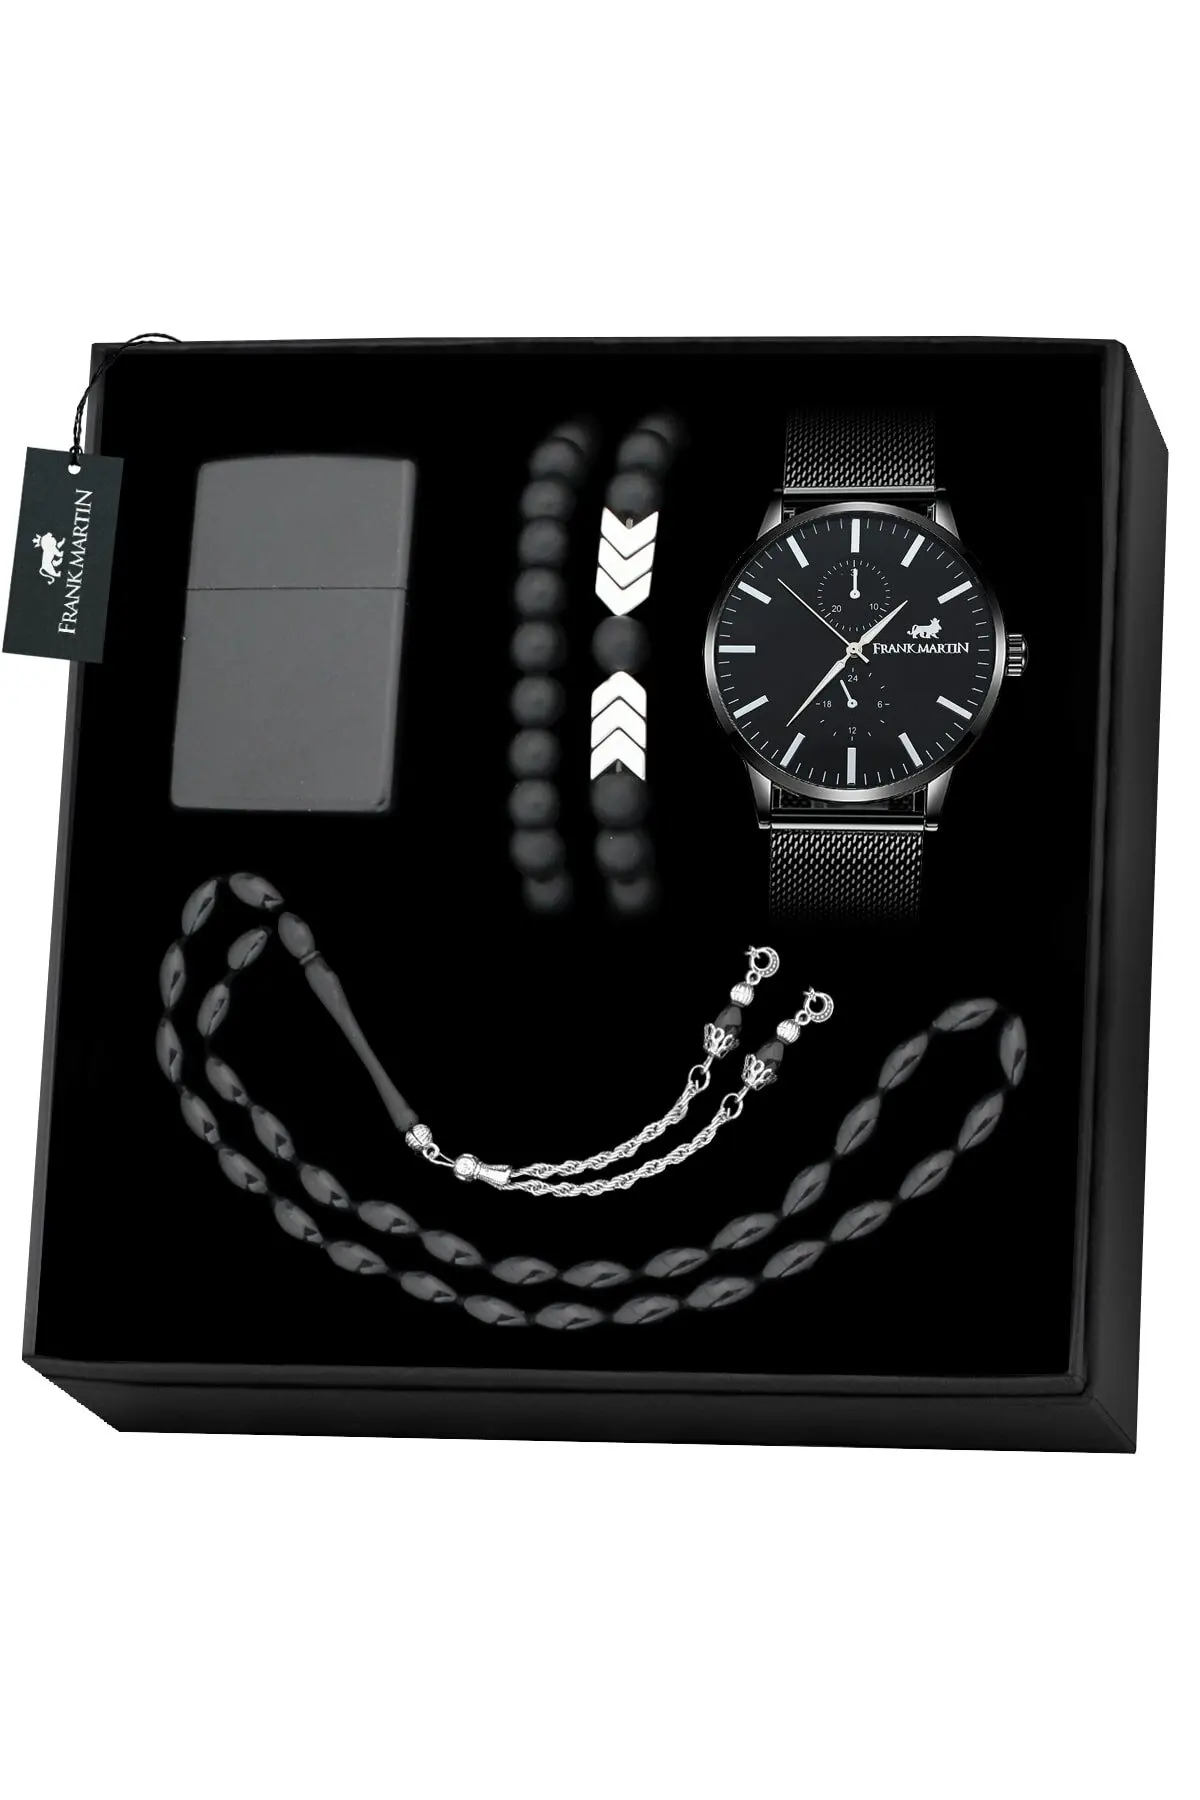 Frank Martin Men's Watch Bracelet Rosary Lighter Set stylish elegant